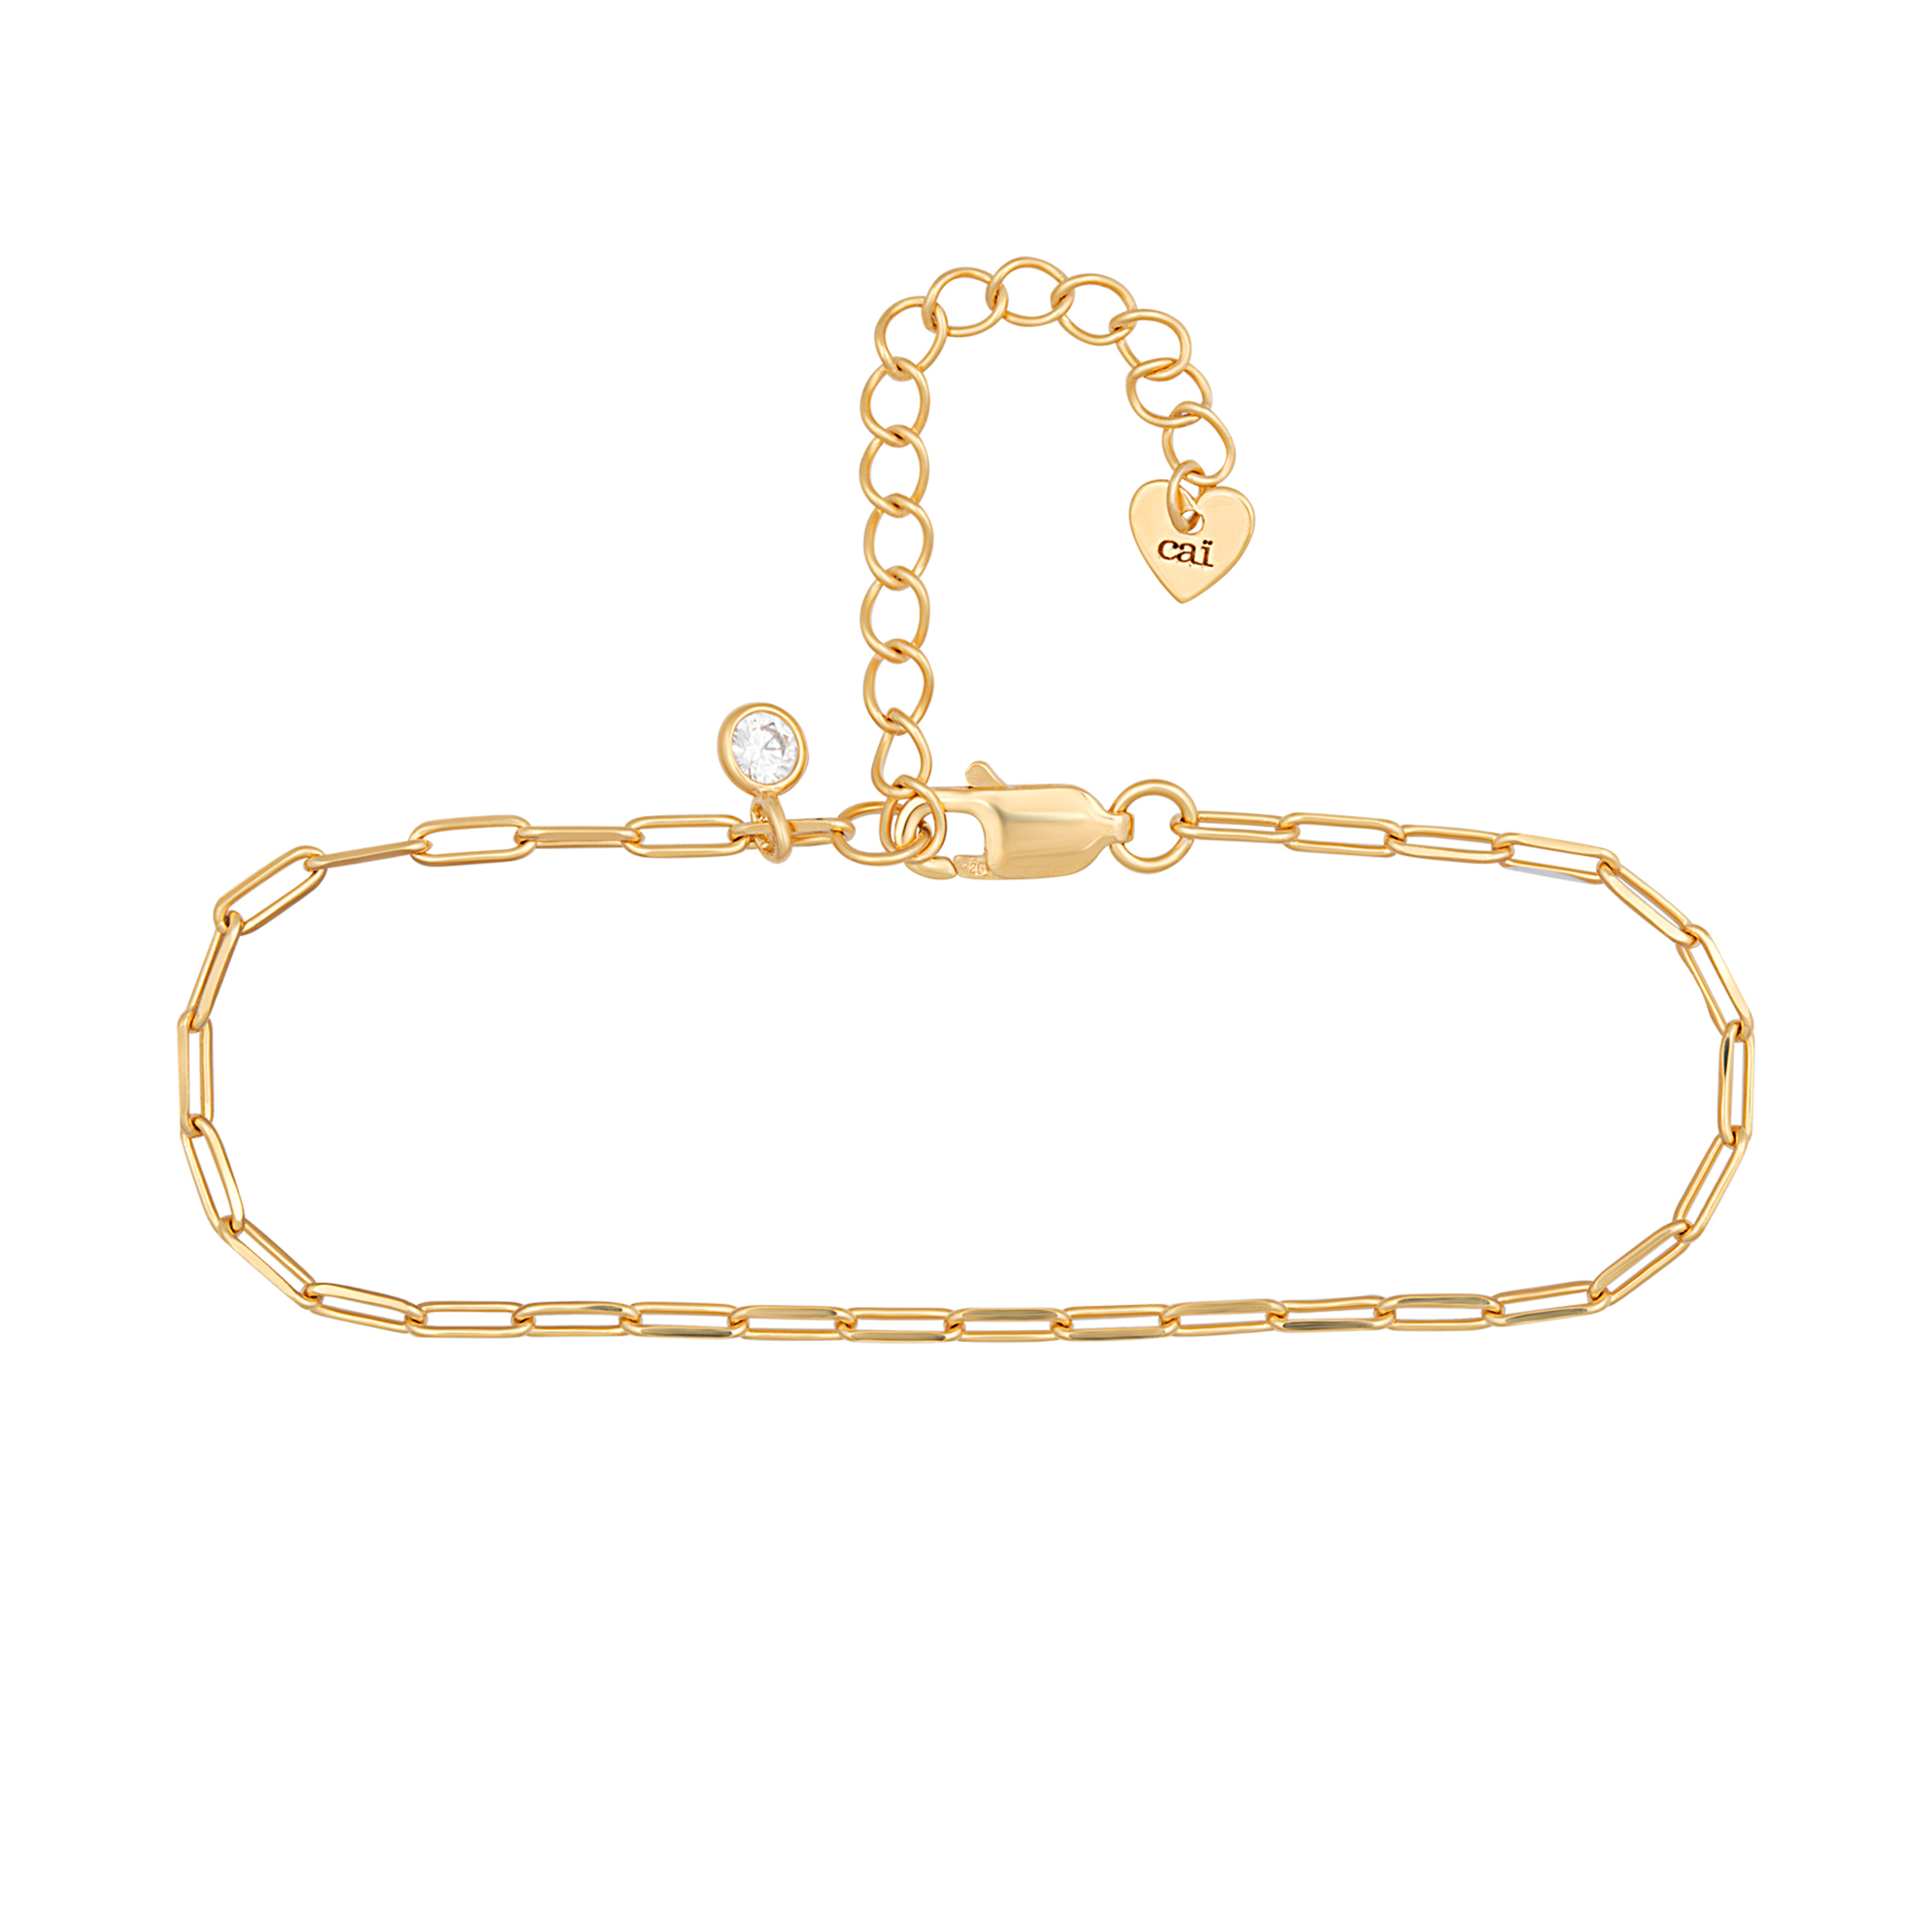 vergoldet | Armbänder Zirkonia Armband cai jewels caï | Armschmuck Silber 925 mit Anhänger |